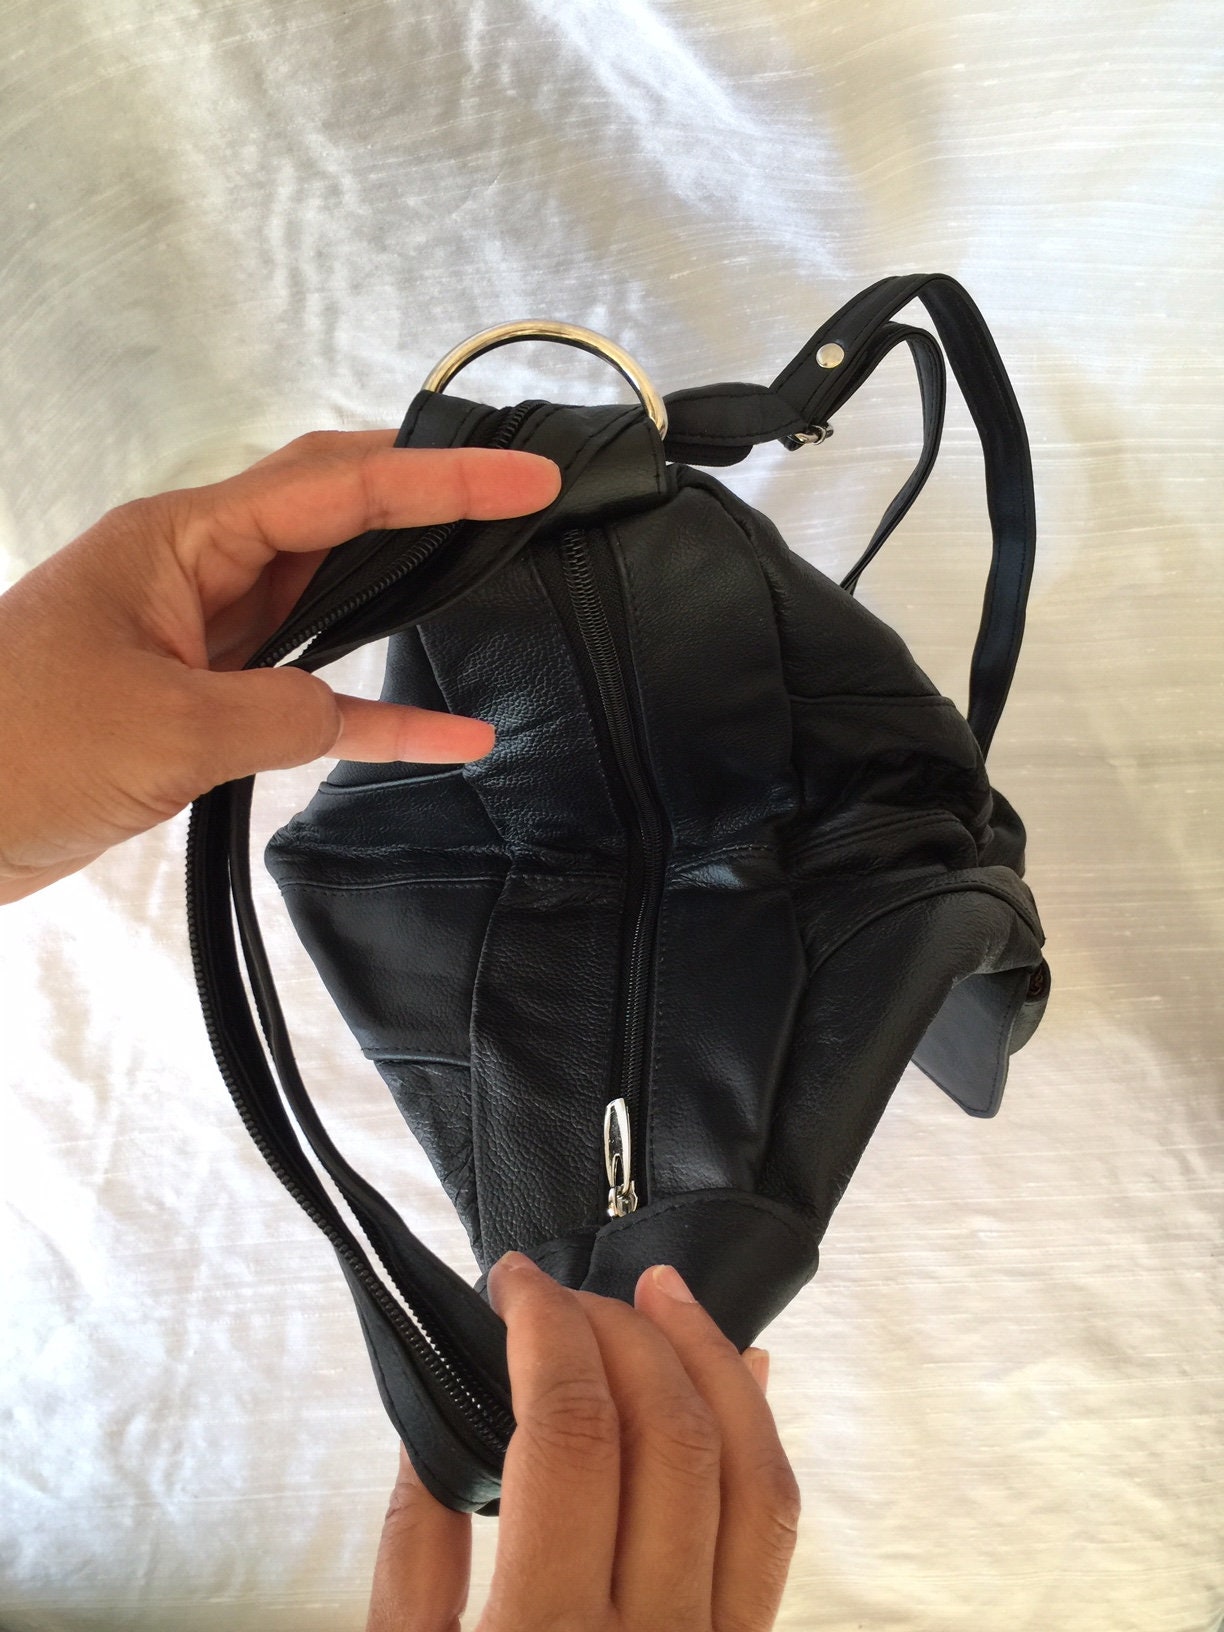 Leather black backpack purse bag with adjustable strap